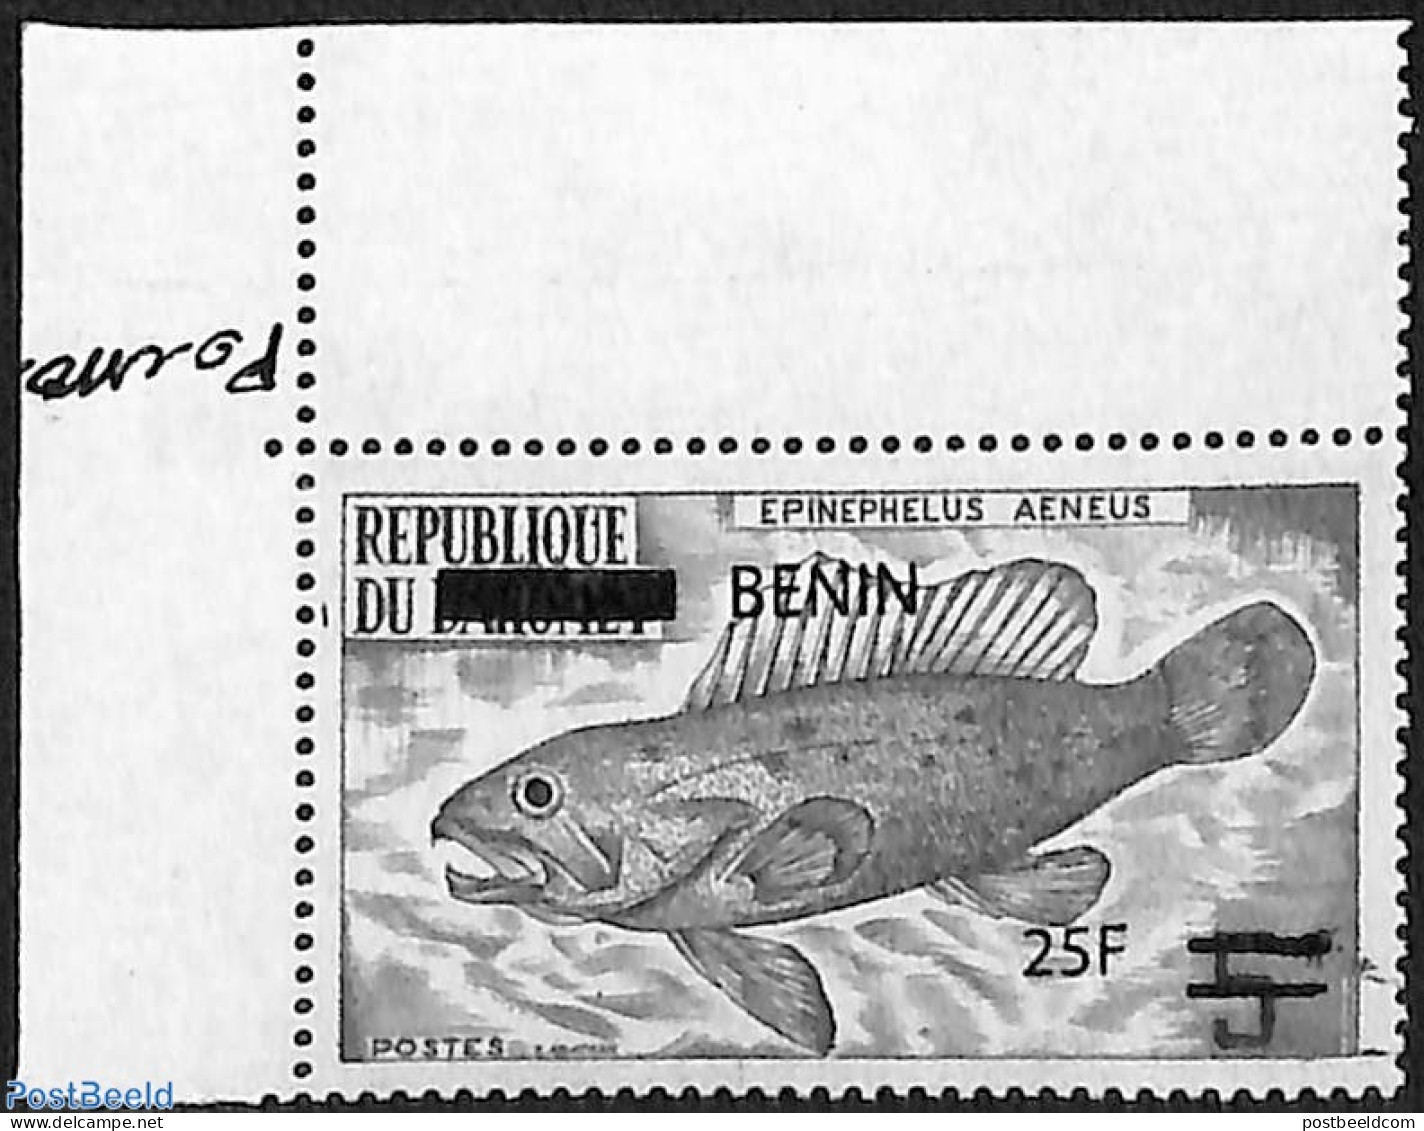 Benin 2007 Epinephelus Aeneus, Fish, Rare, Overprint, Mint NH, Nature - Various - Fish - Errors, Misprints, Plate Flaws - Neufs